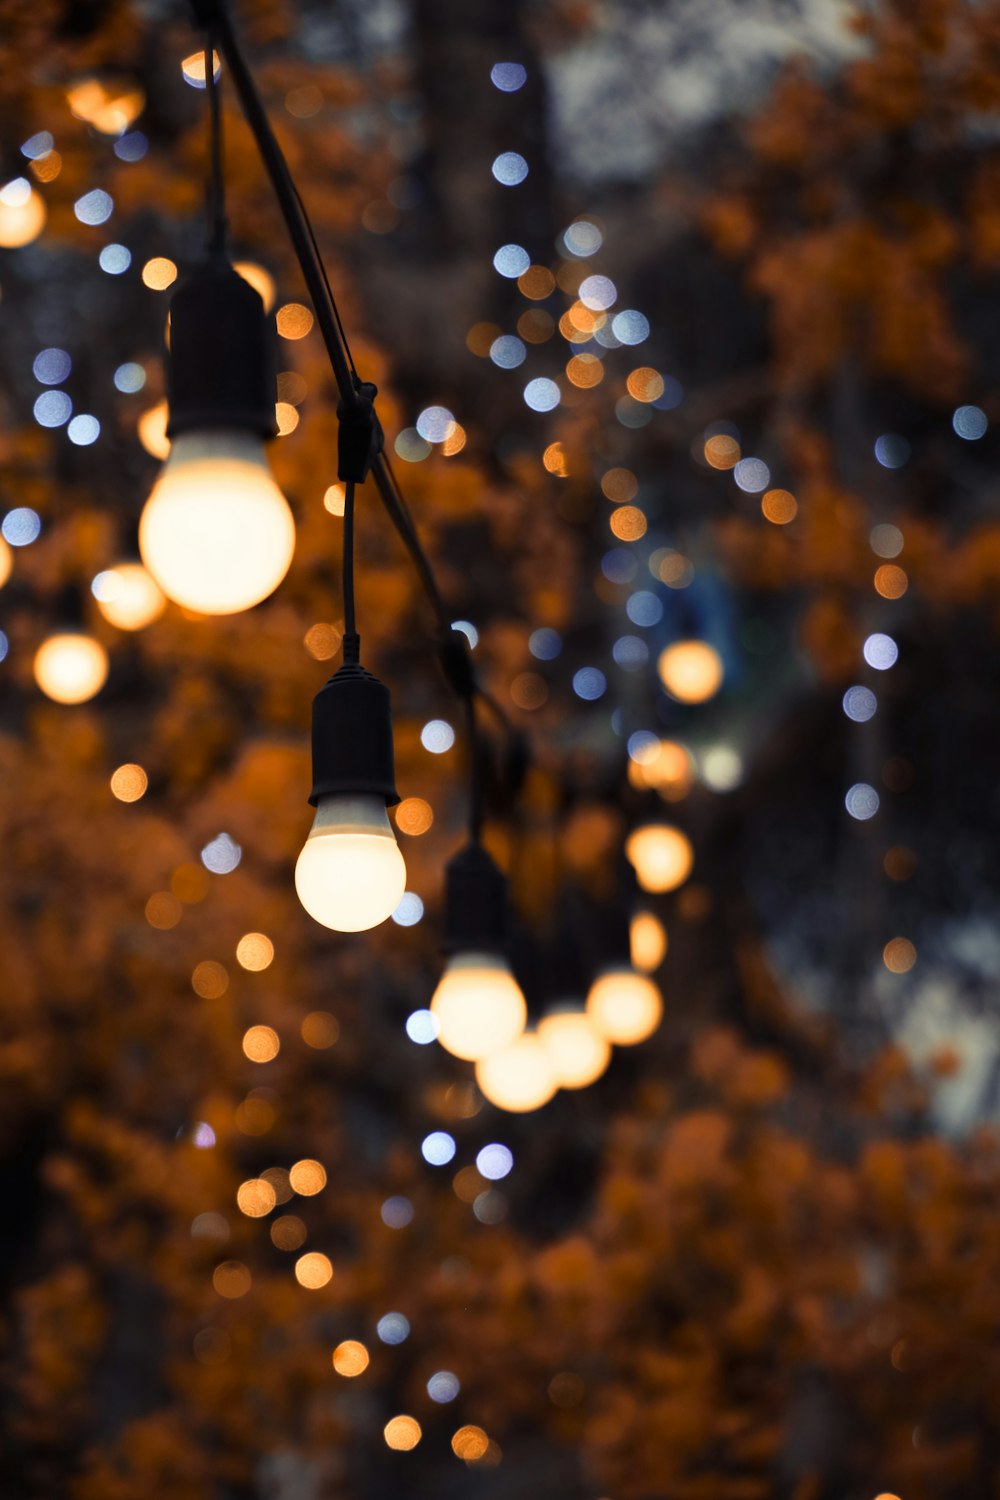 Winter Lights Pictures | Download Free Images on Unsplash